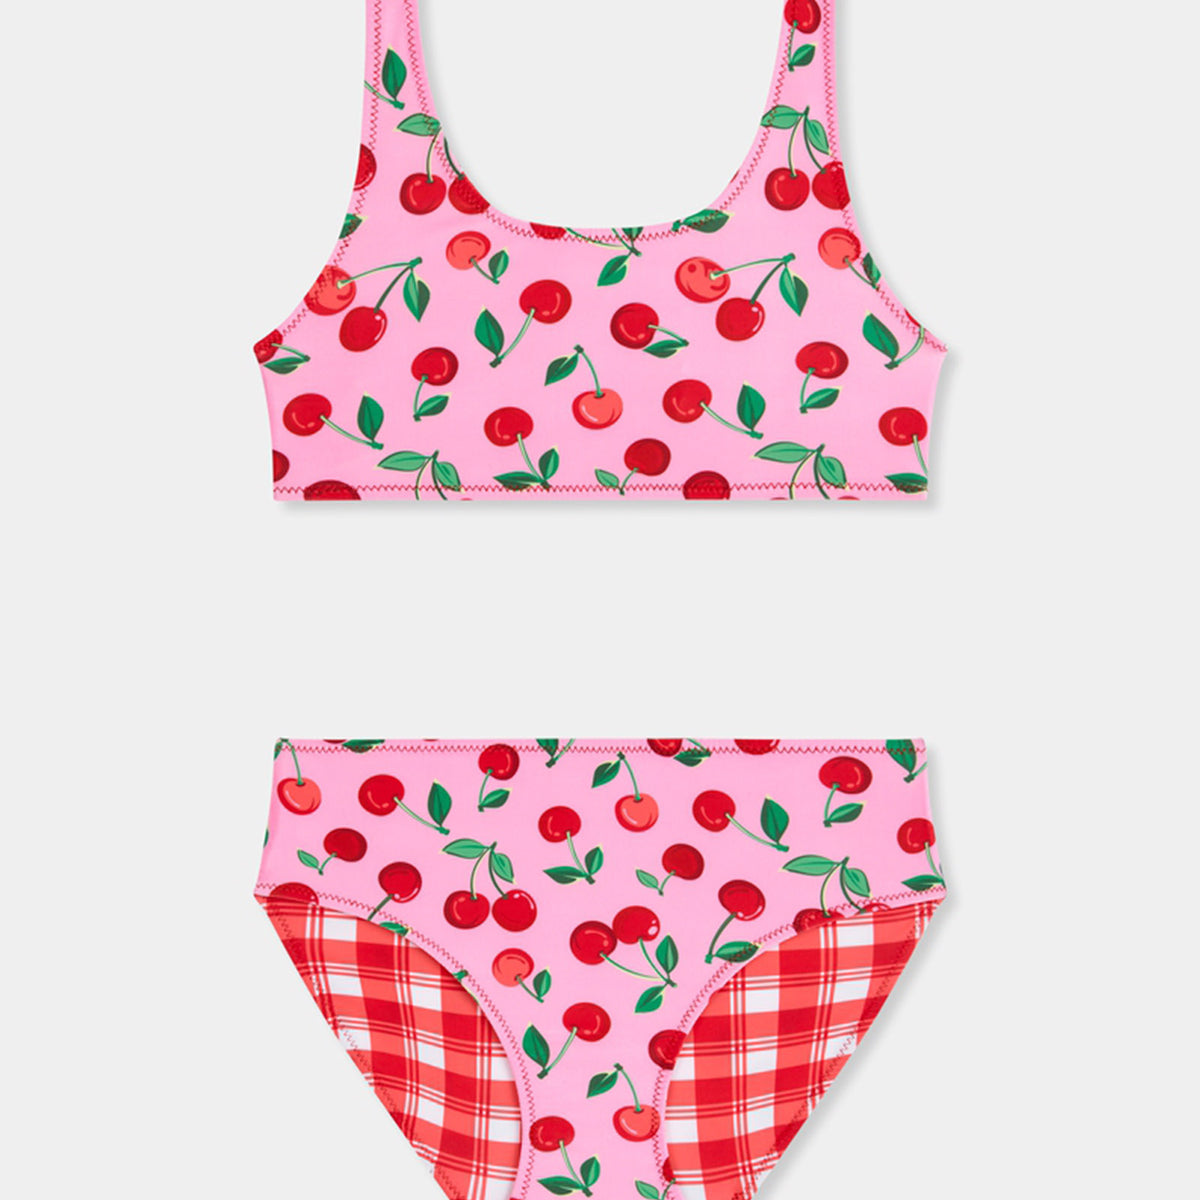 Seafolly Girls' Cherry Pie Reversible Two Piece Bikini Set (Big Kid) at